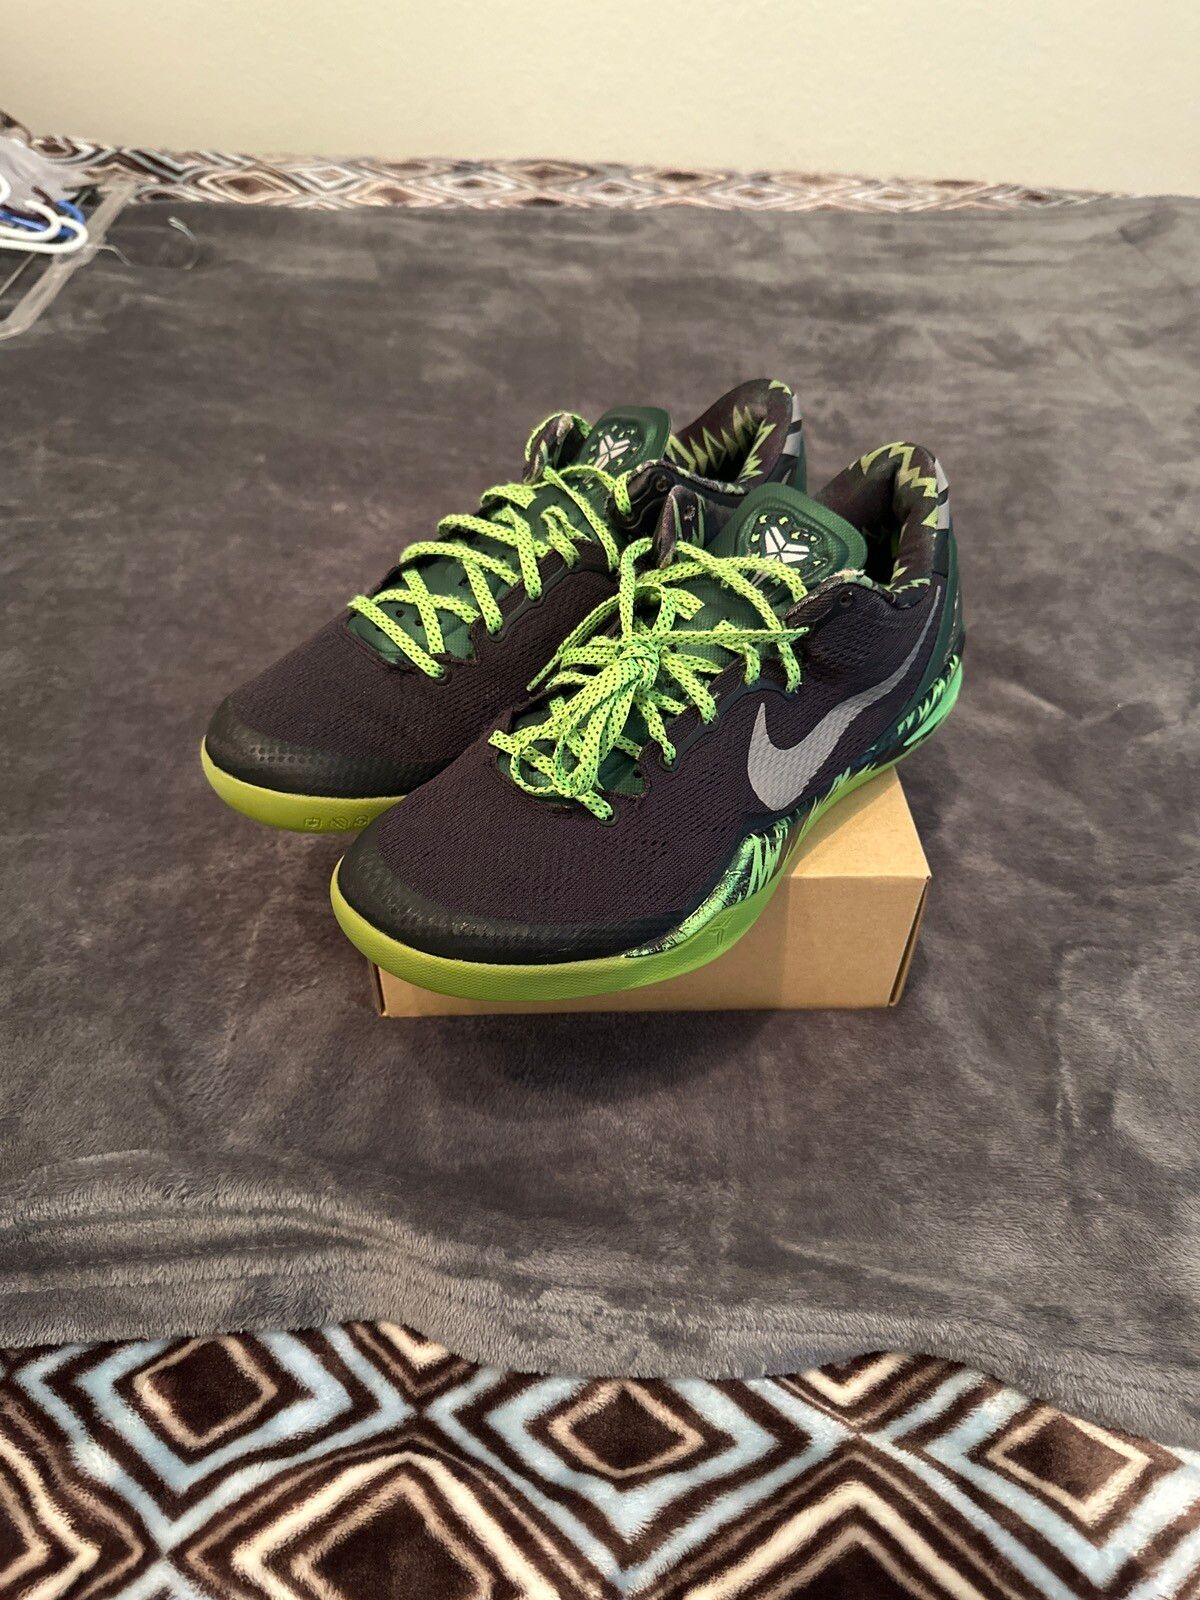 Pre-owned Kobe Mentality X Nike Kobe 8 Phillipines Pack- George Green Shoes In Black/green